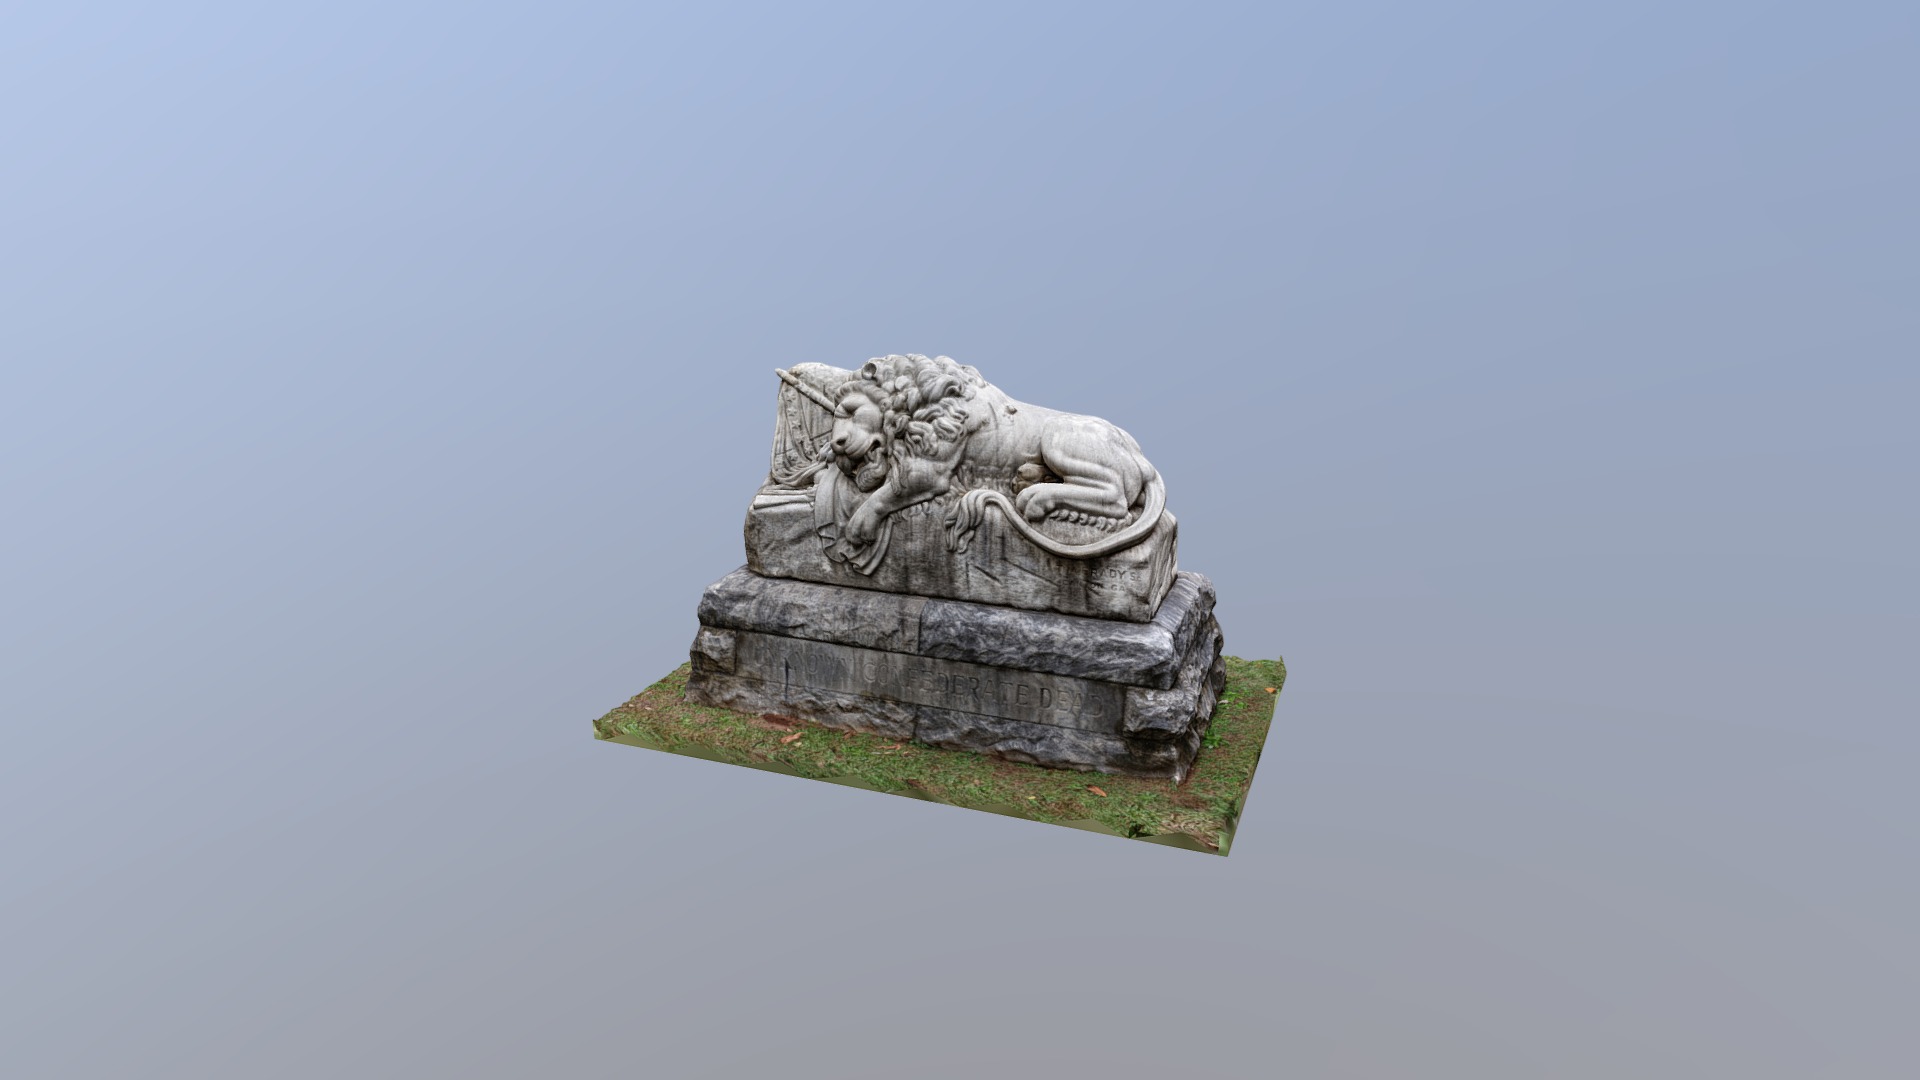 3D model Oakland Cemetery – Unknown Confederate Dead - This is a 3D model of the Oakland Cemetery - Unknown Confederate Dead. The 3D model is about a stone statue on a grassy hill.